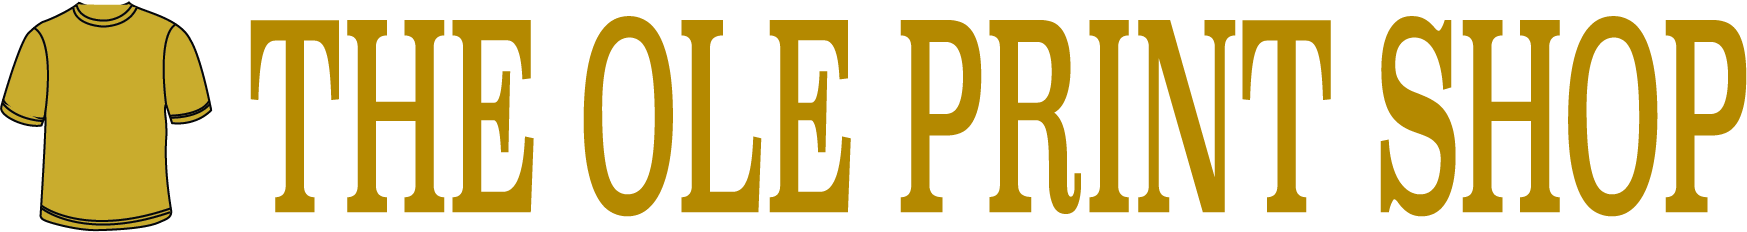 the ole print shop logo